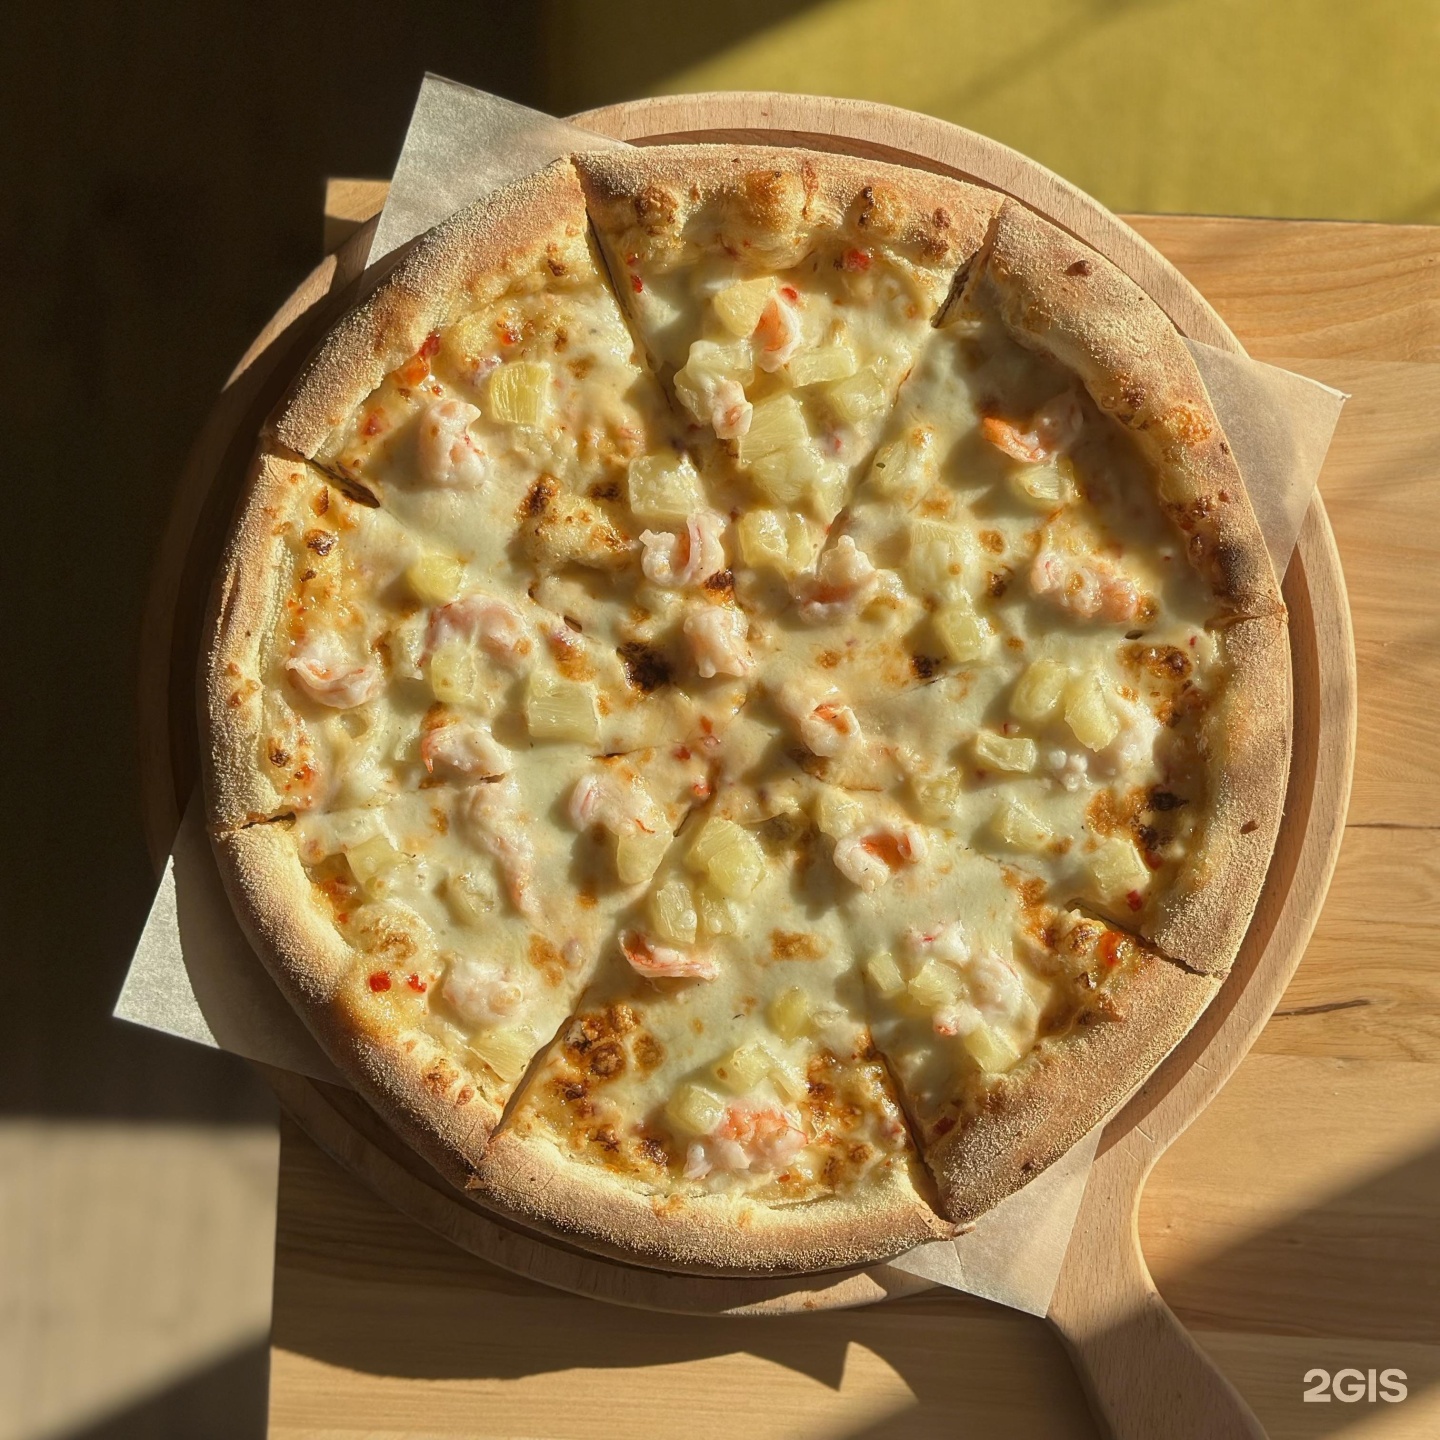 Пицца паста мичуринская ул 205а тамбов